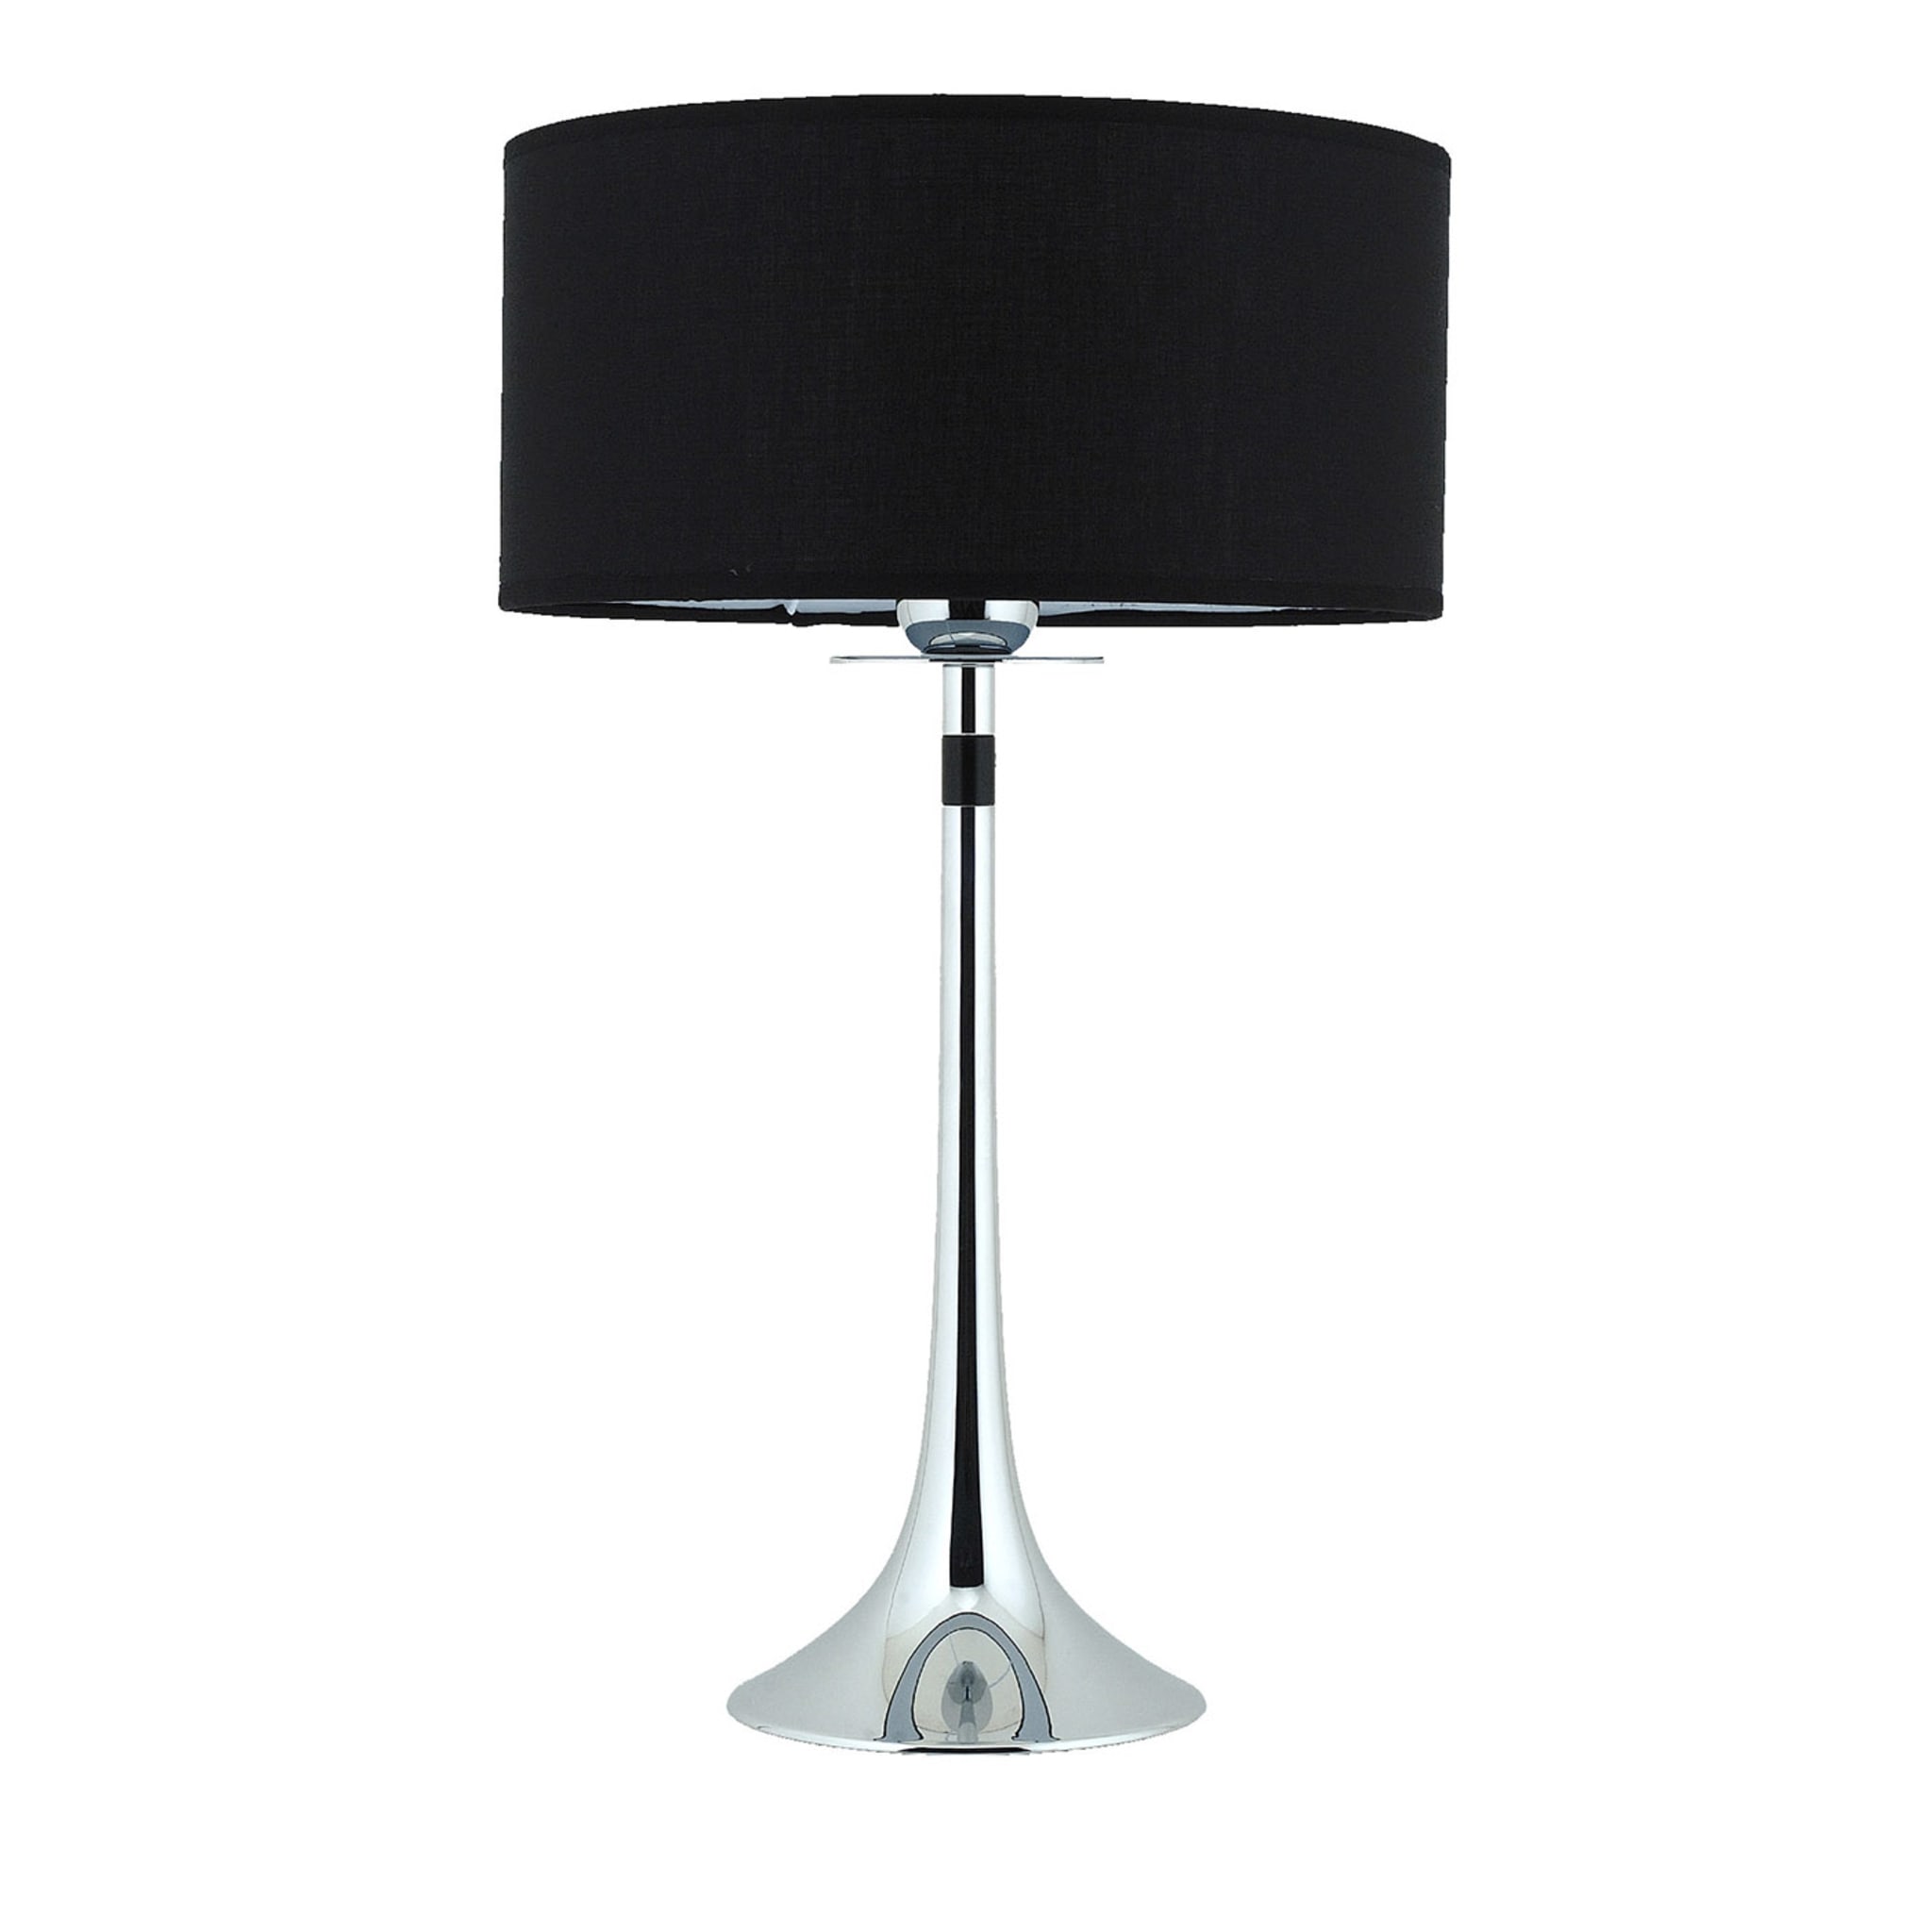 Vivien Small Black & Chrome Table Lamp - Main view